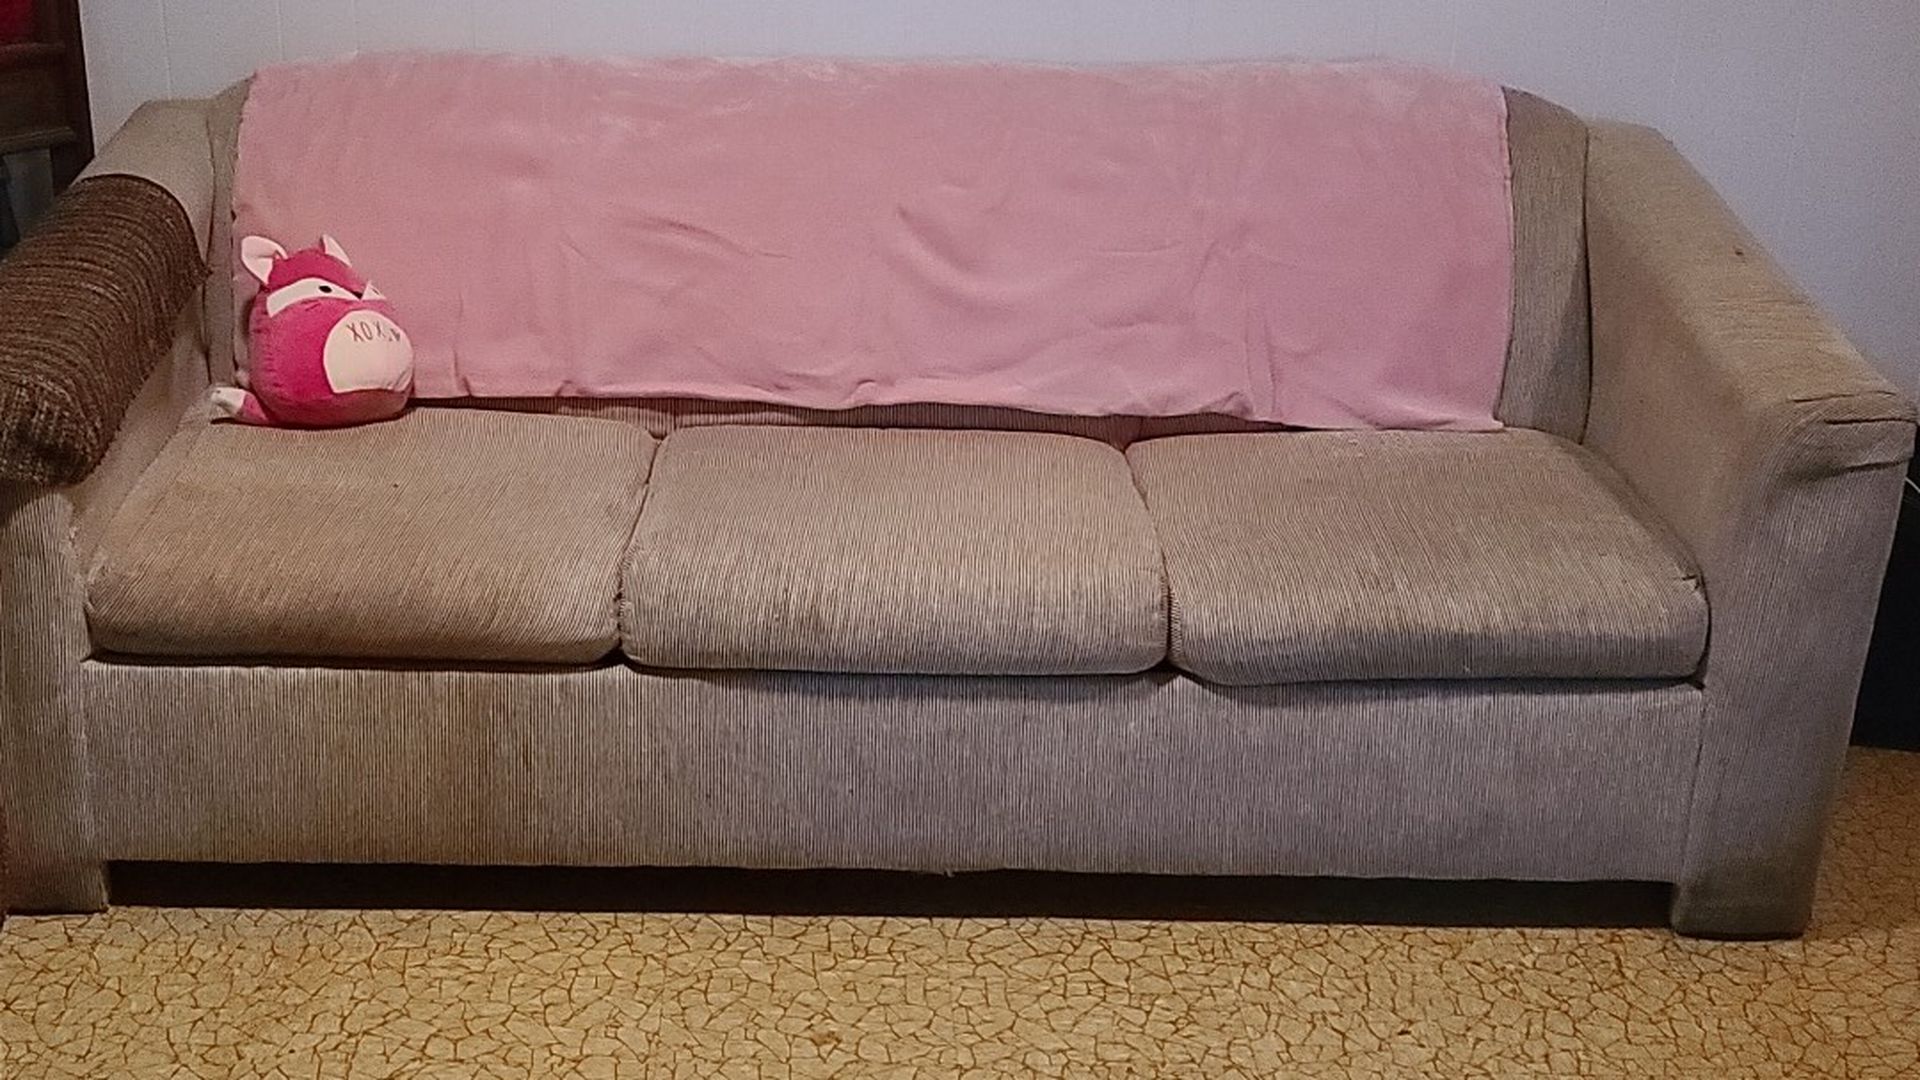 FREE Sleeper sofa